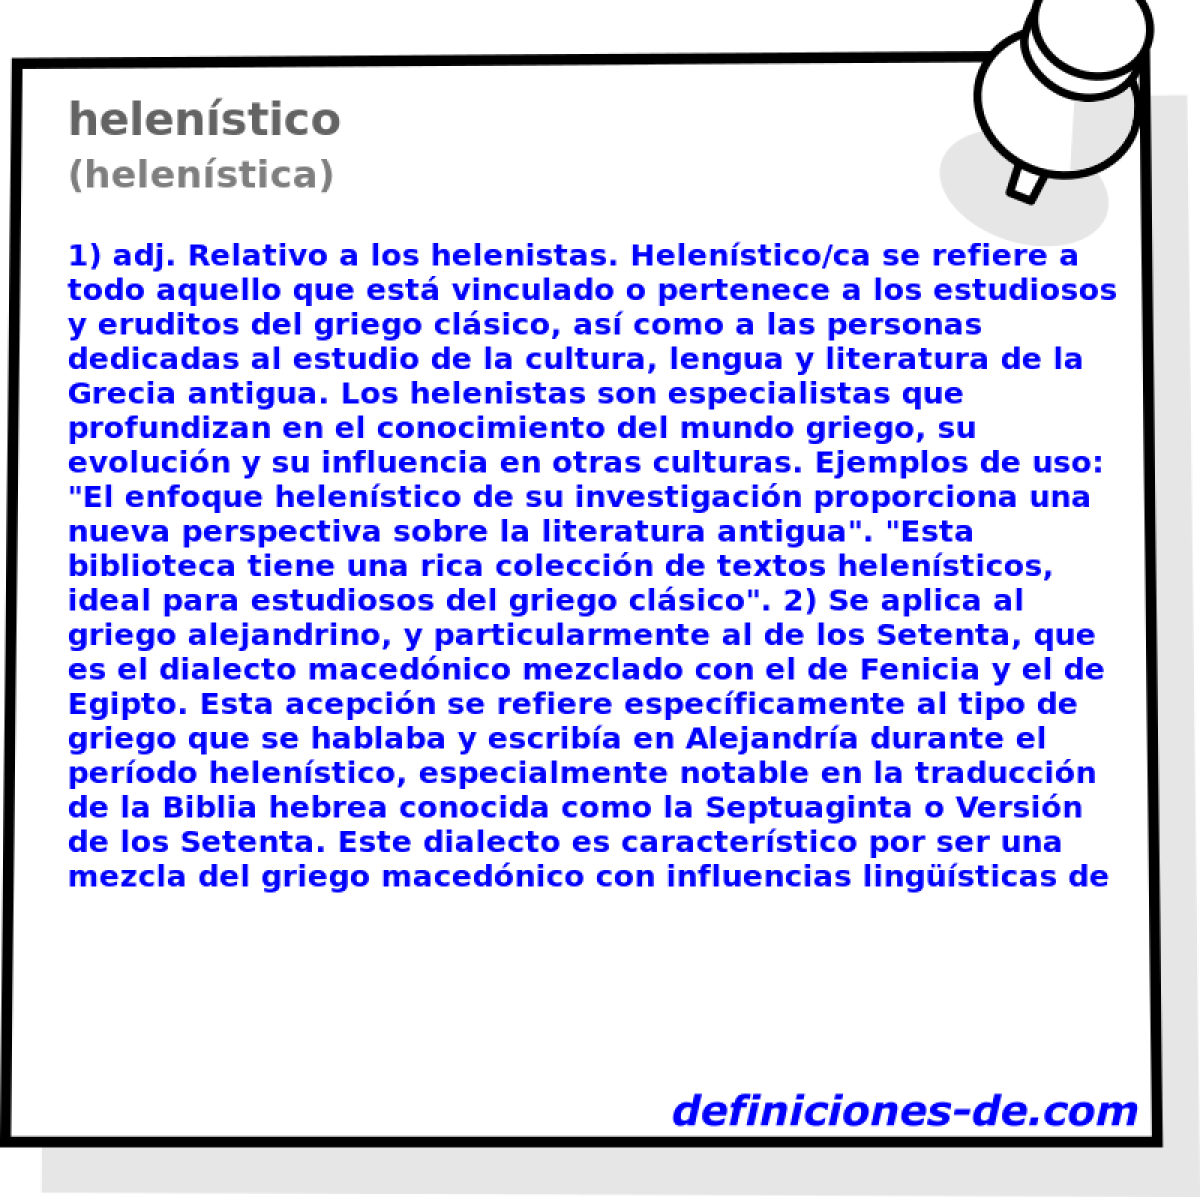 helenstico (helenstica)